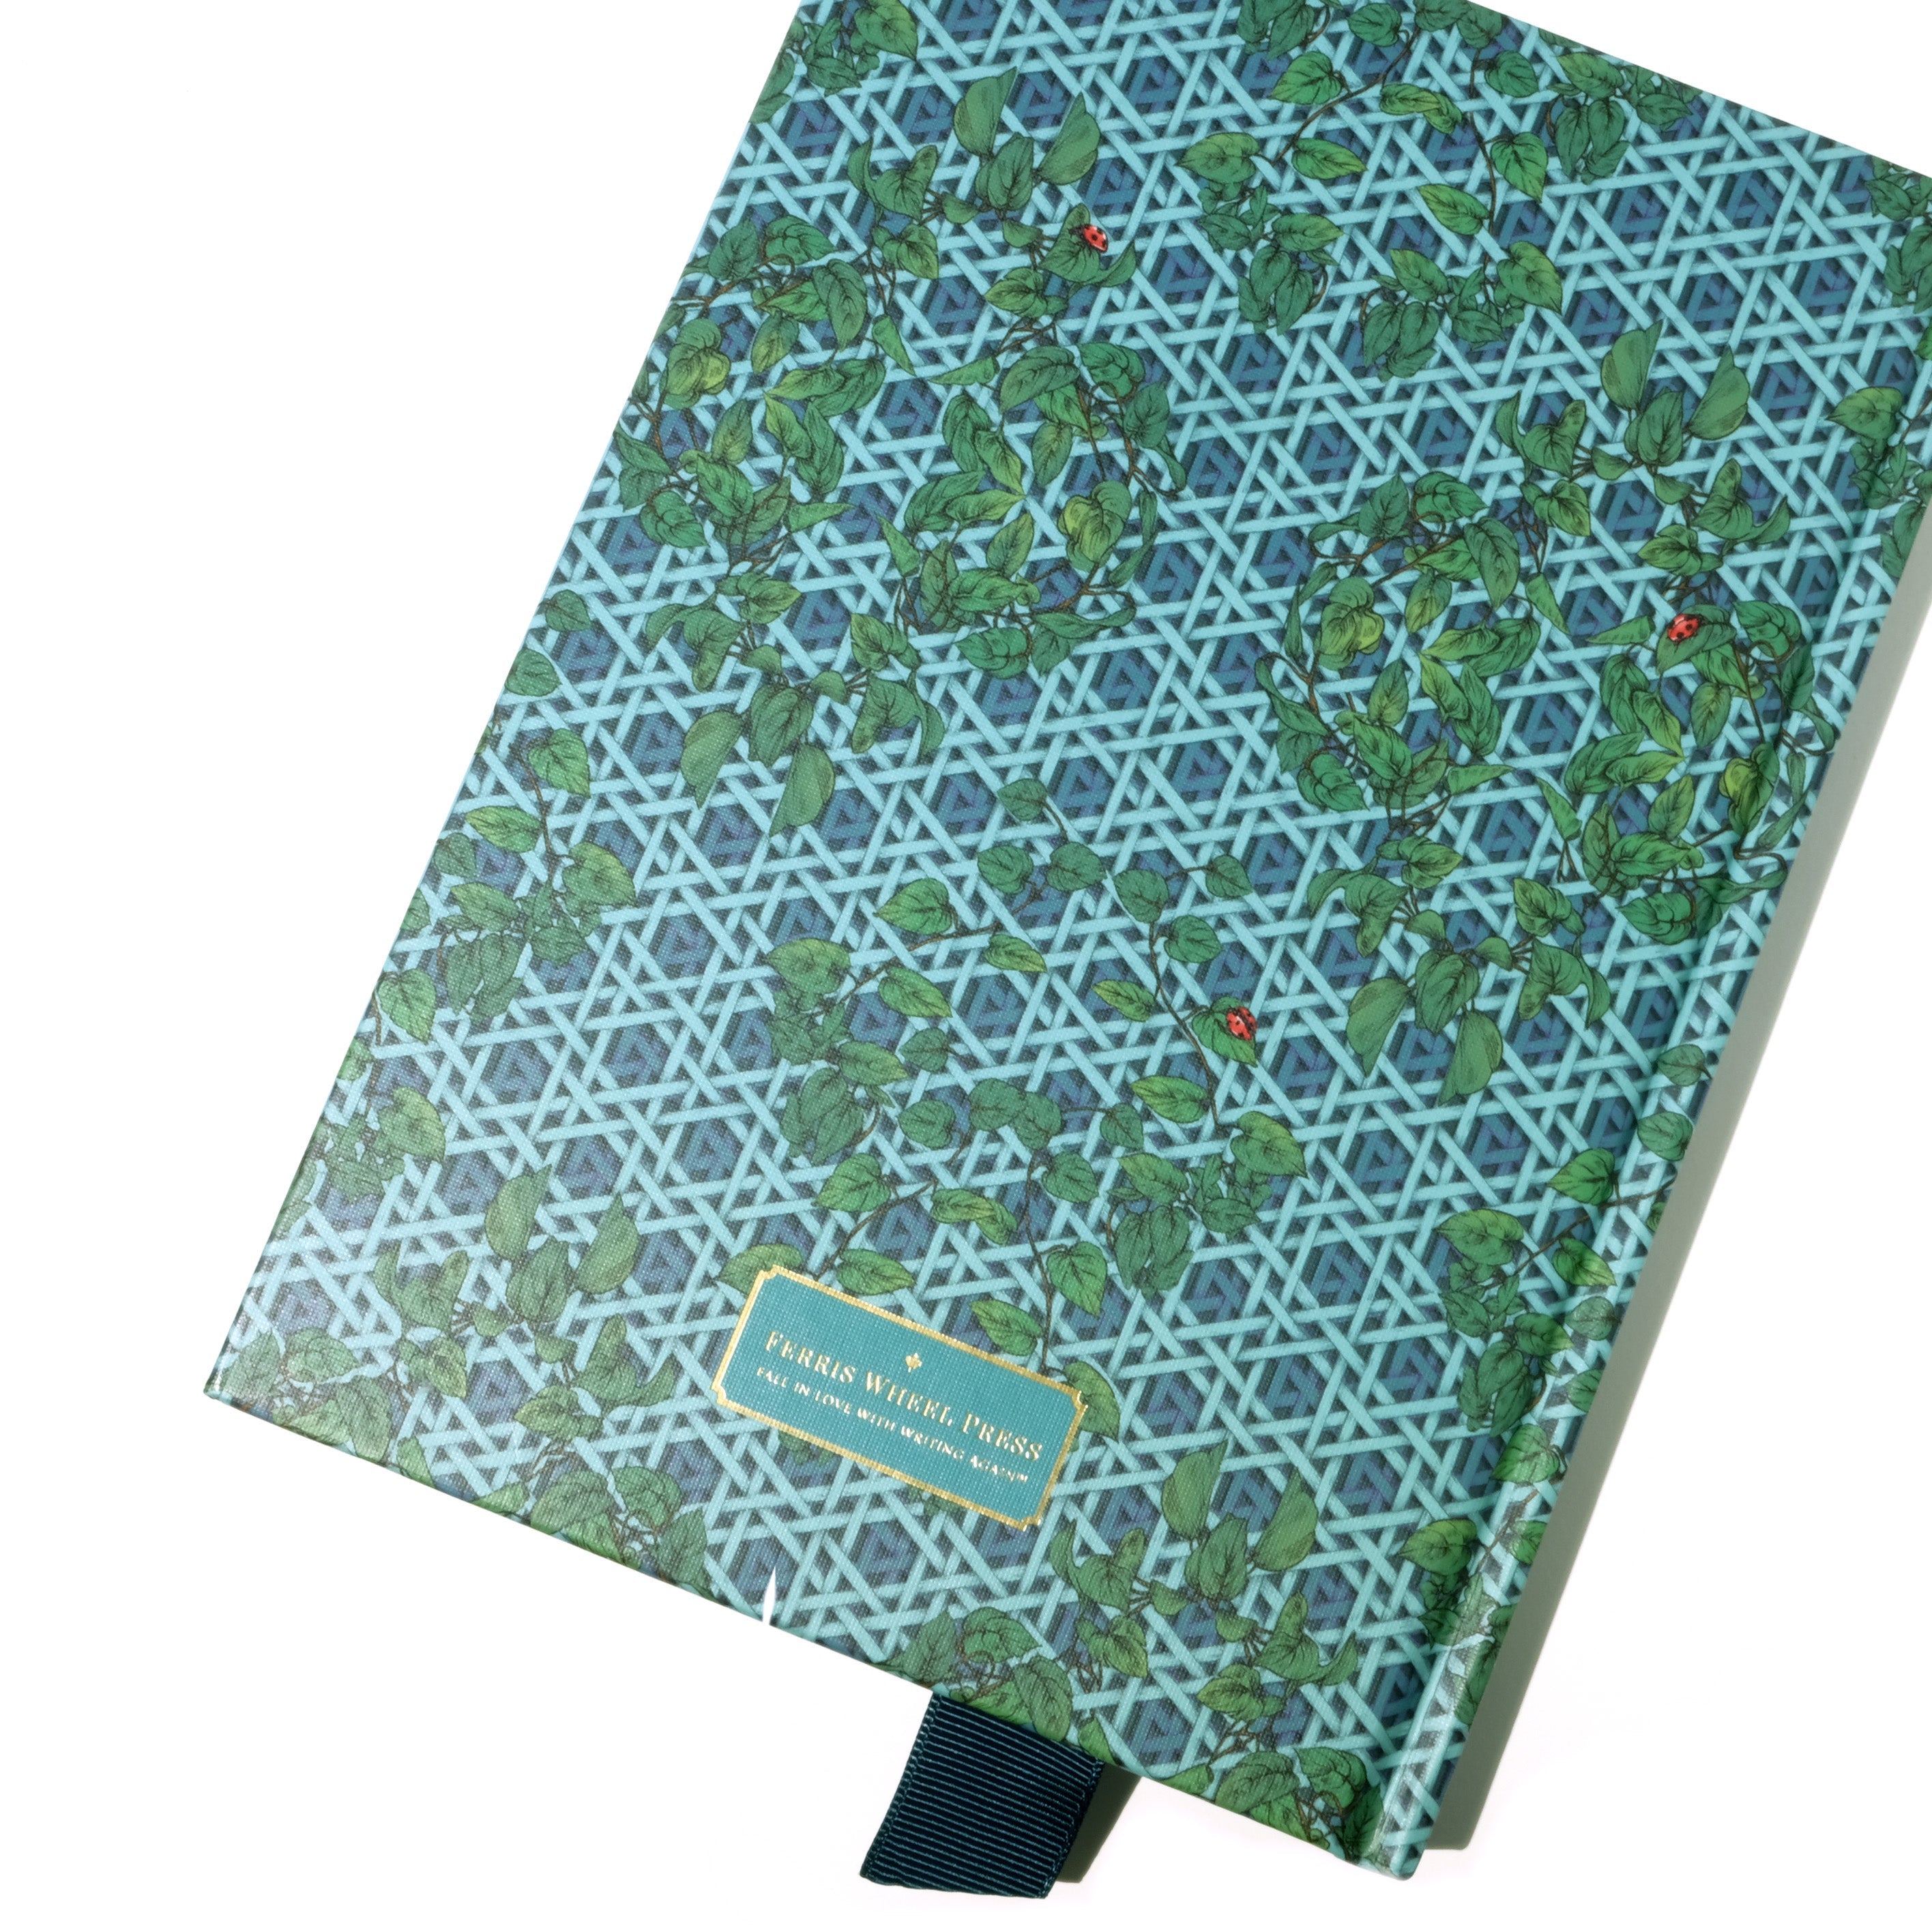 The Sketchbook A5 Enveloped in Rattan - Teal